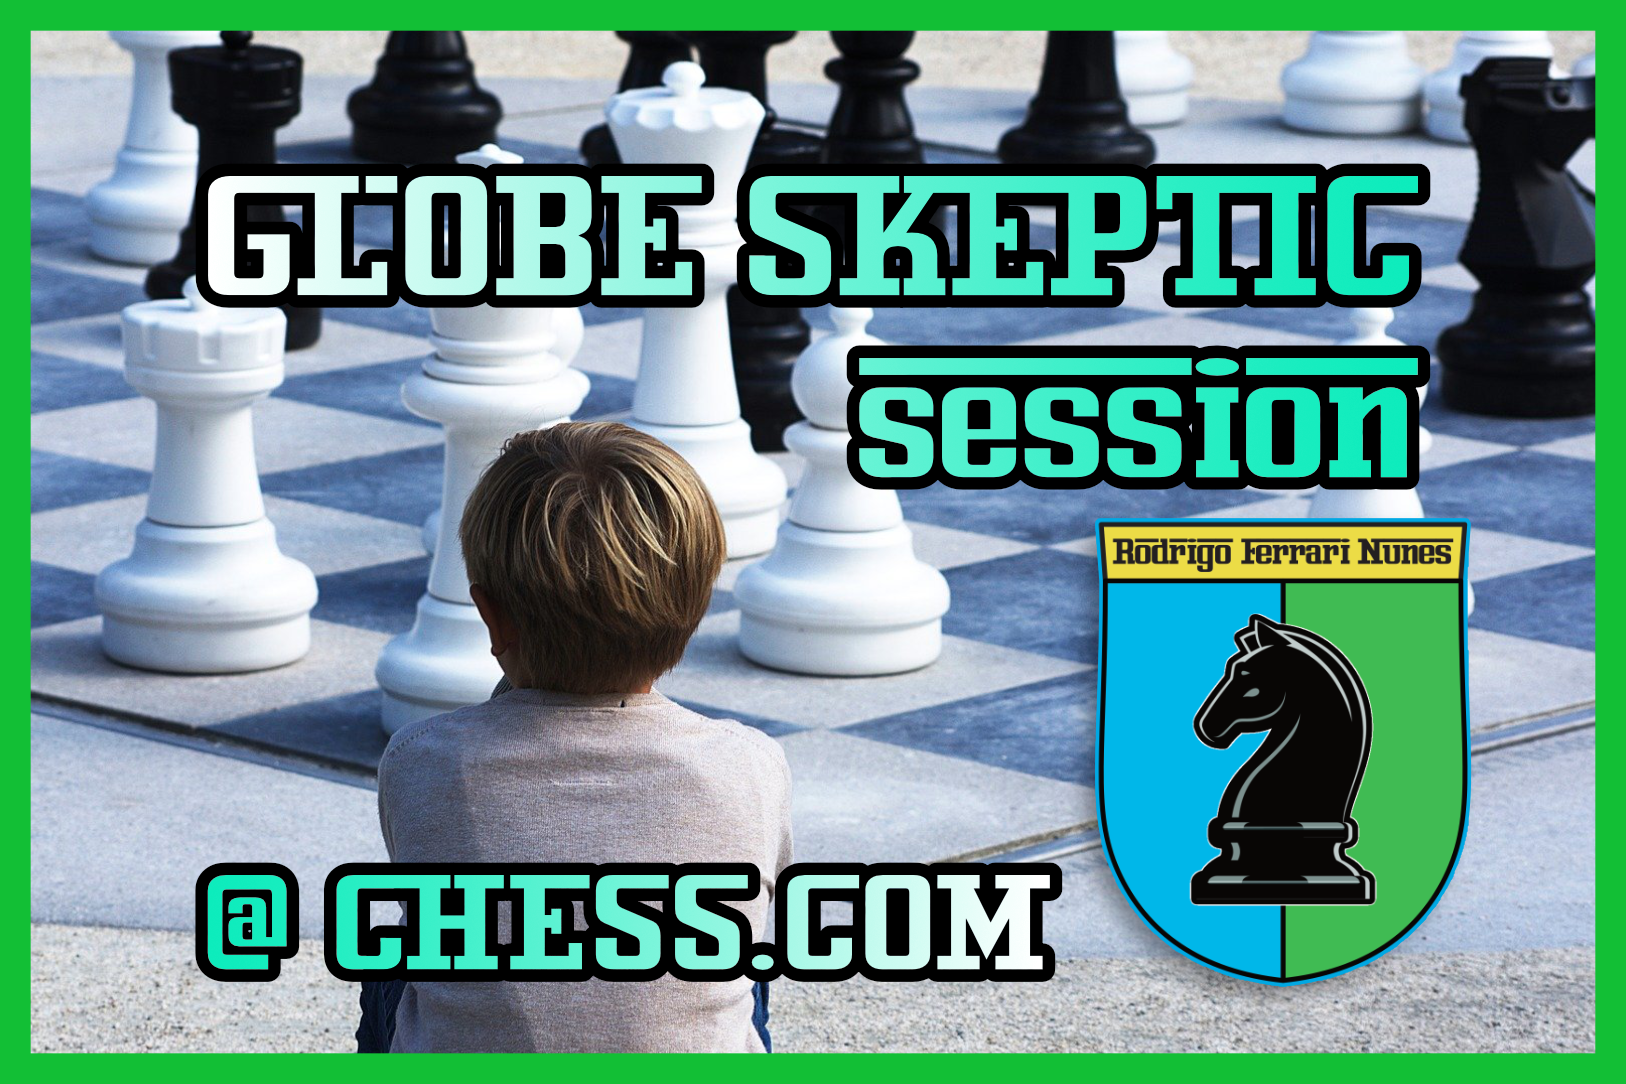 GLOBE SKEPTIC SESSION #1 @chess.com